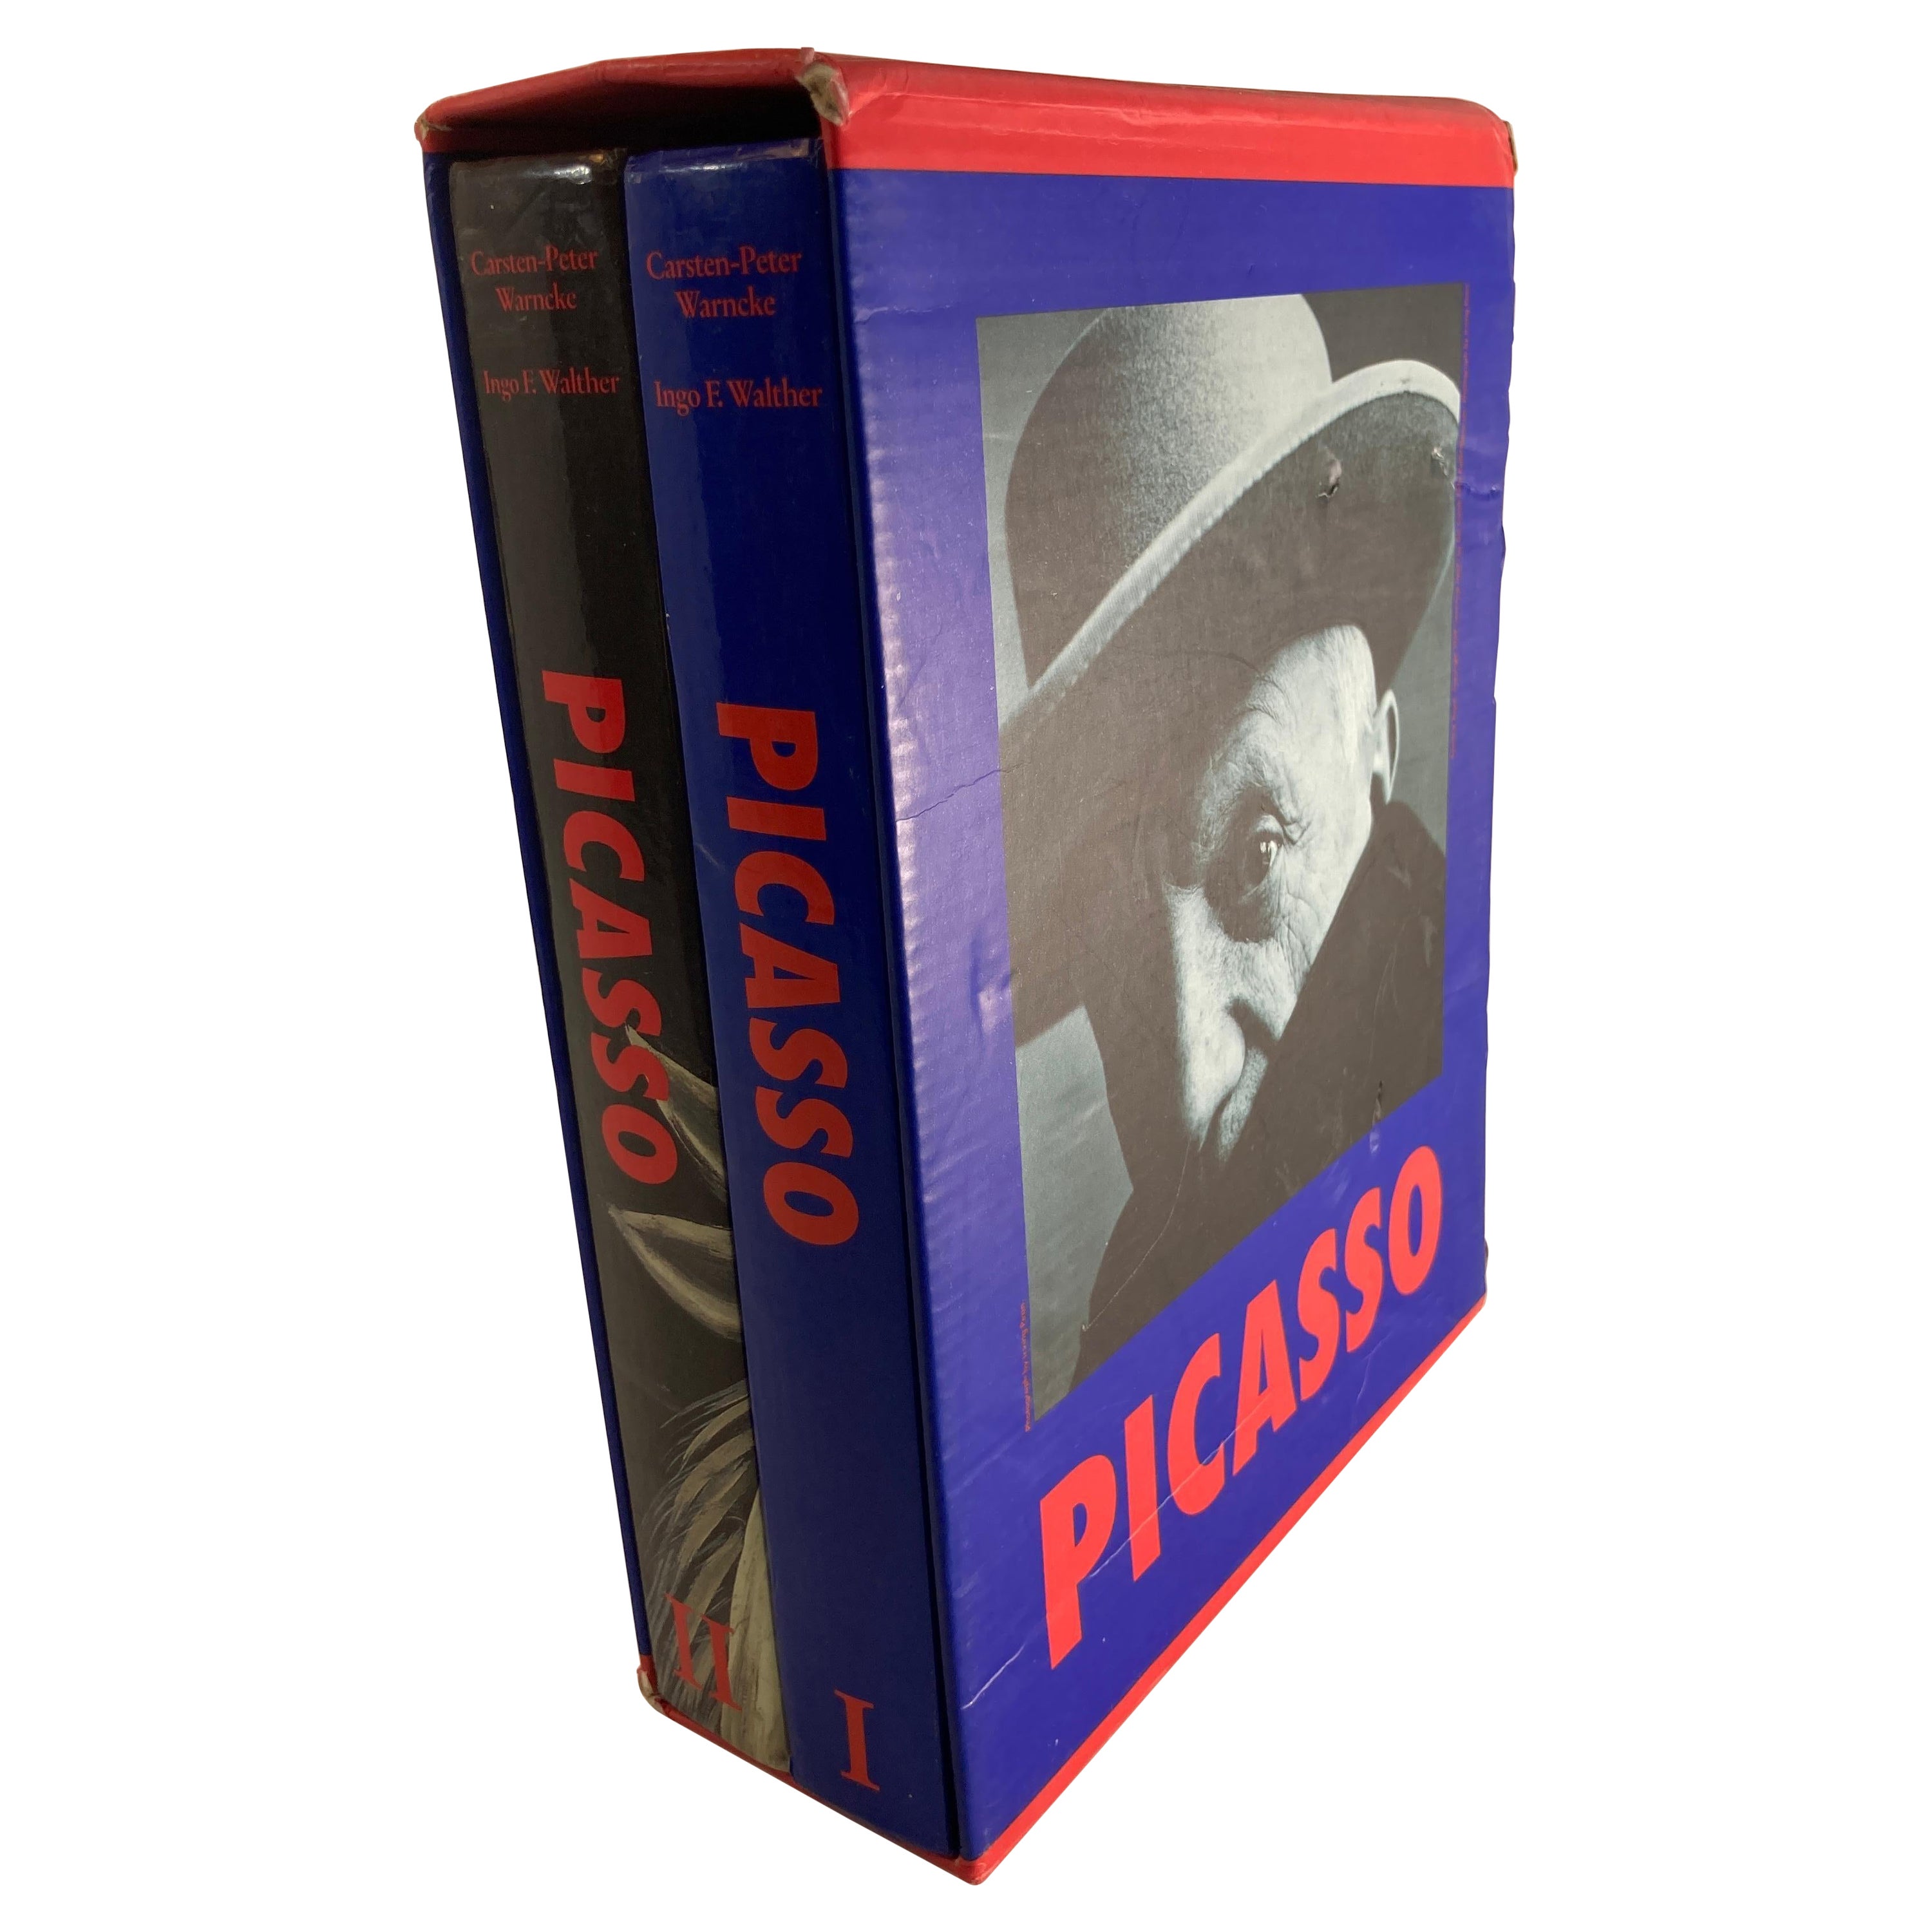 Ensemble de boîtes en 2 volumes de Picasso pour Carsten-Peter Warncke Pub Benedikt Taschen 1995